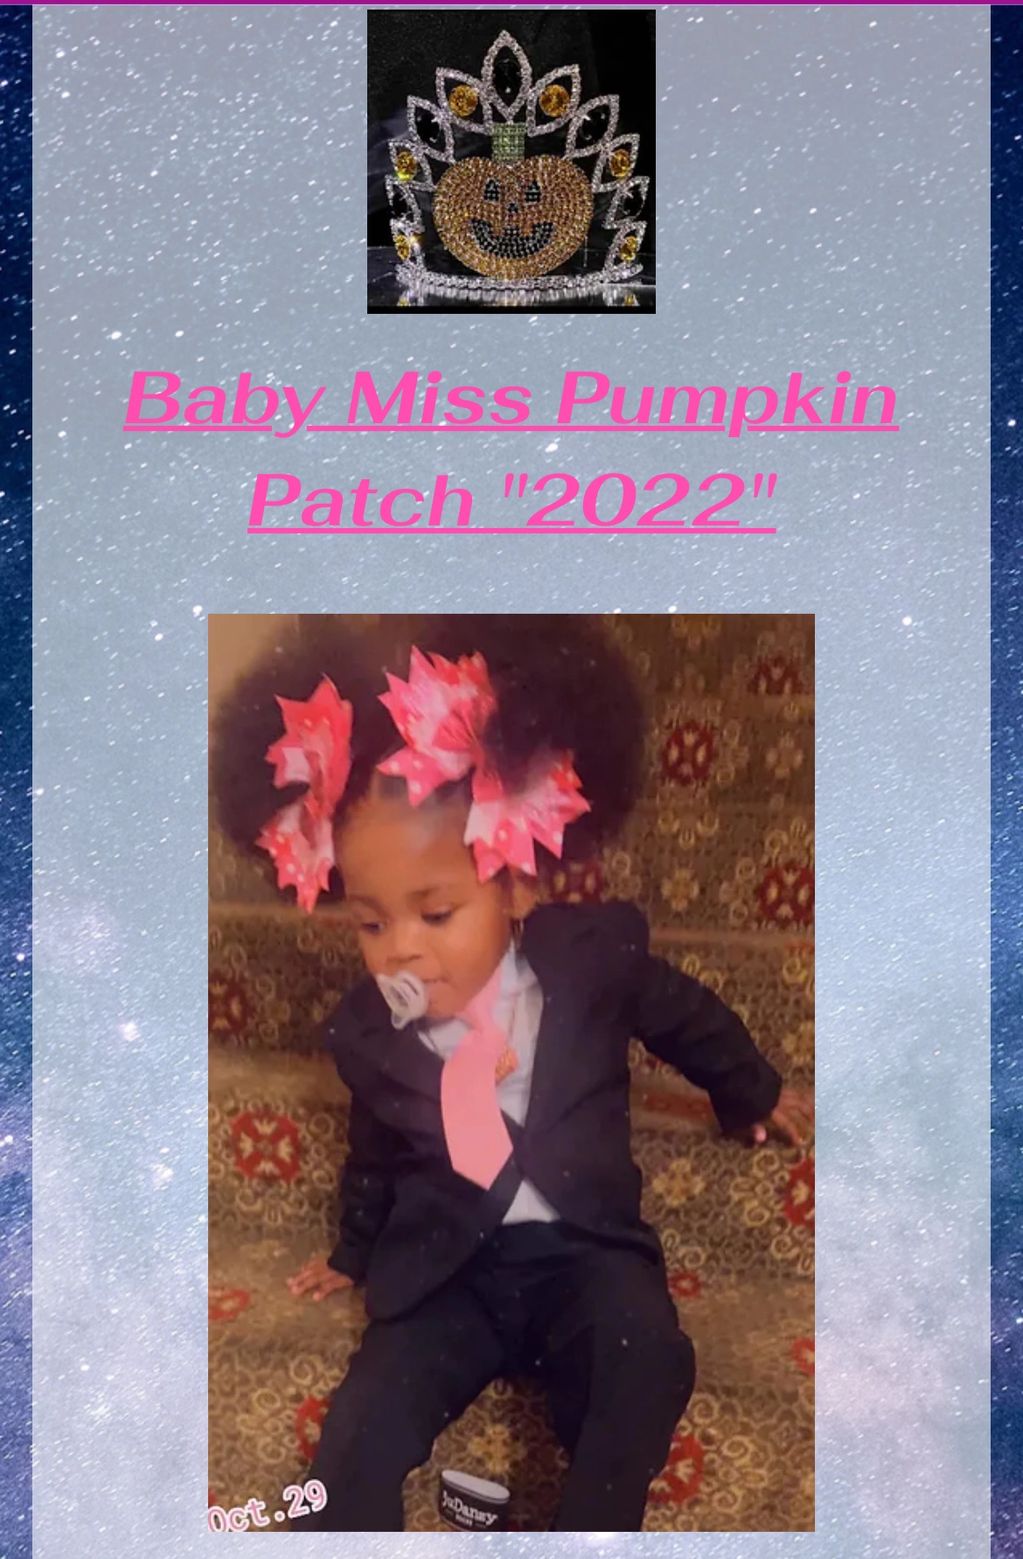 Baby Miss Pumpkin Patch 2022 Chloe aka boss baby